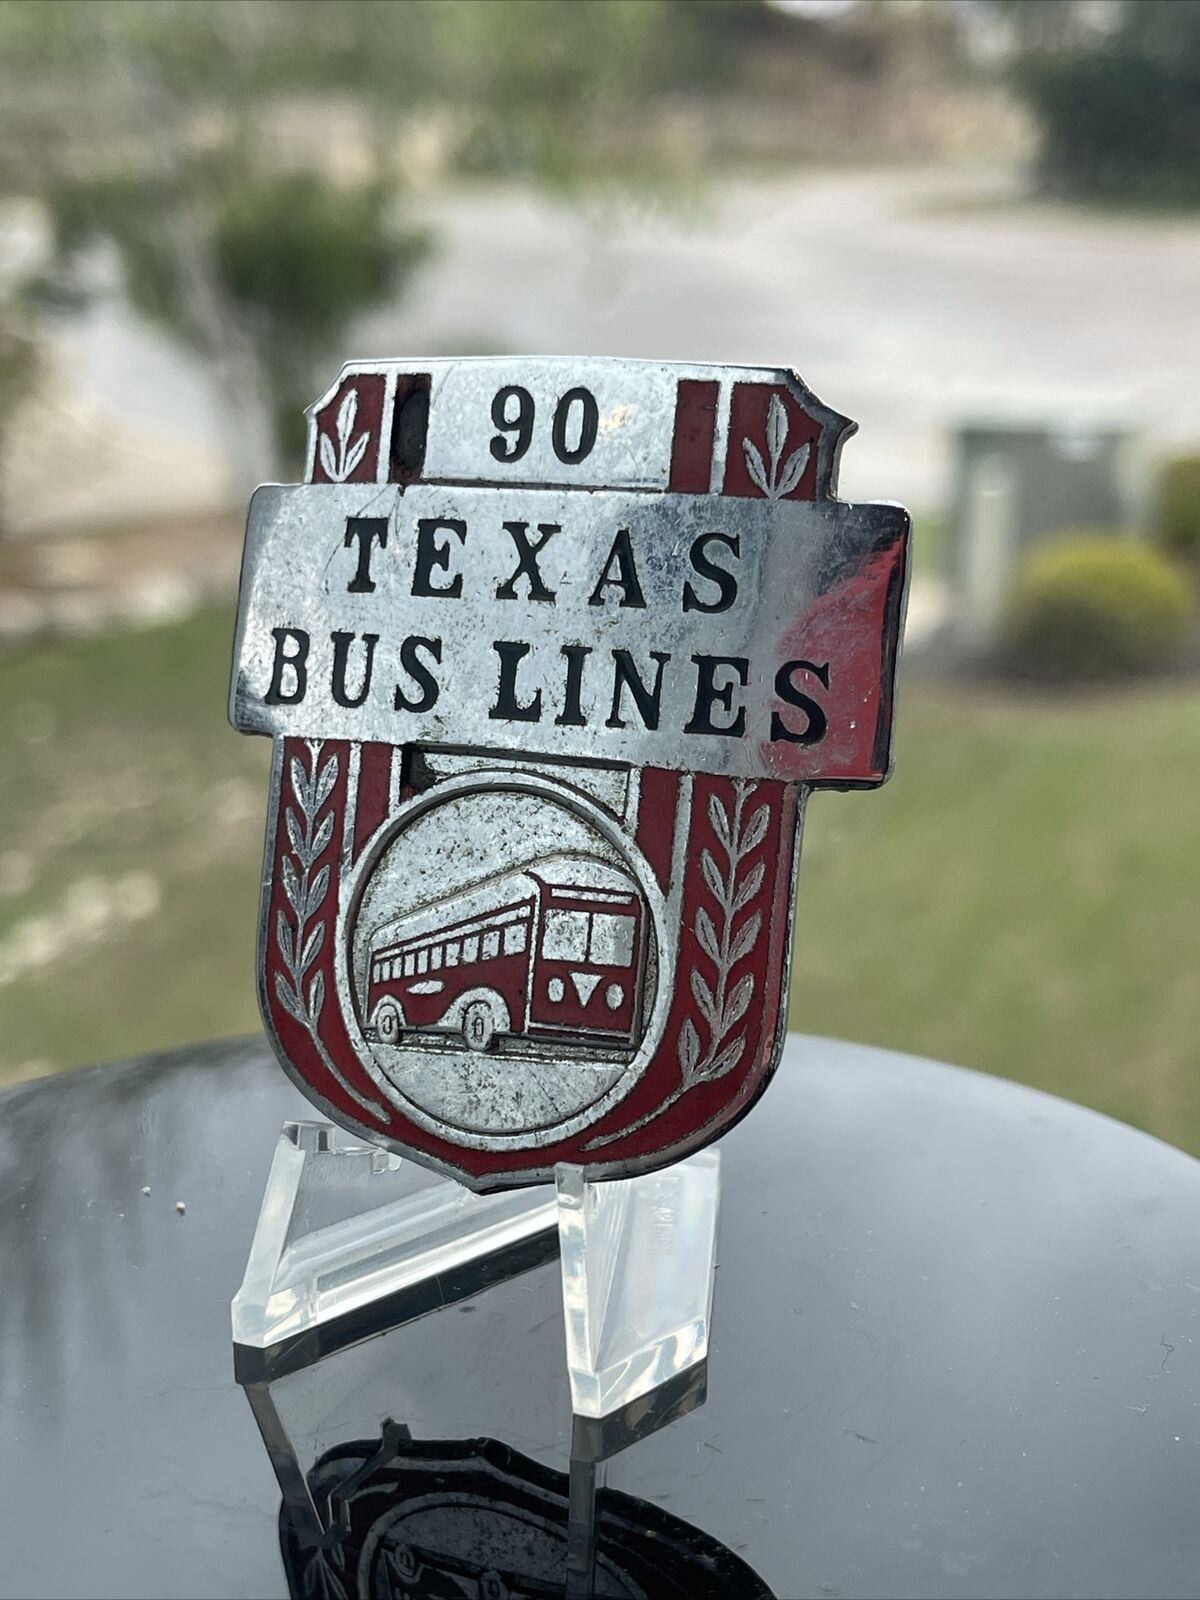 1930s era Texas bus lines bus driver badge